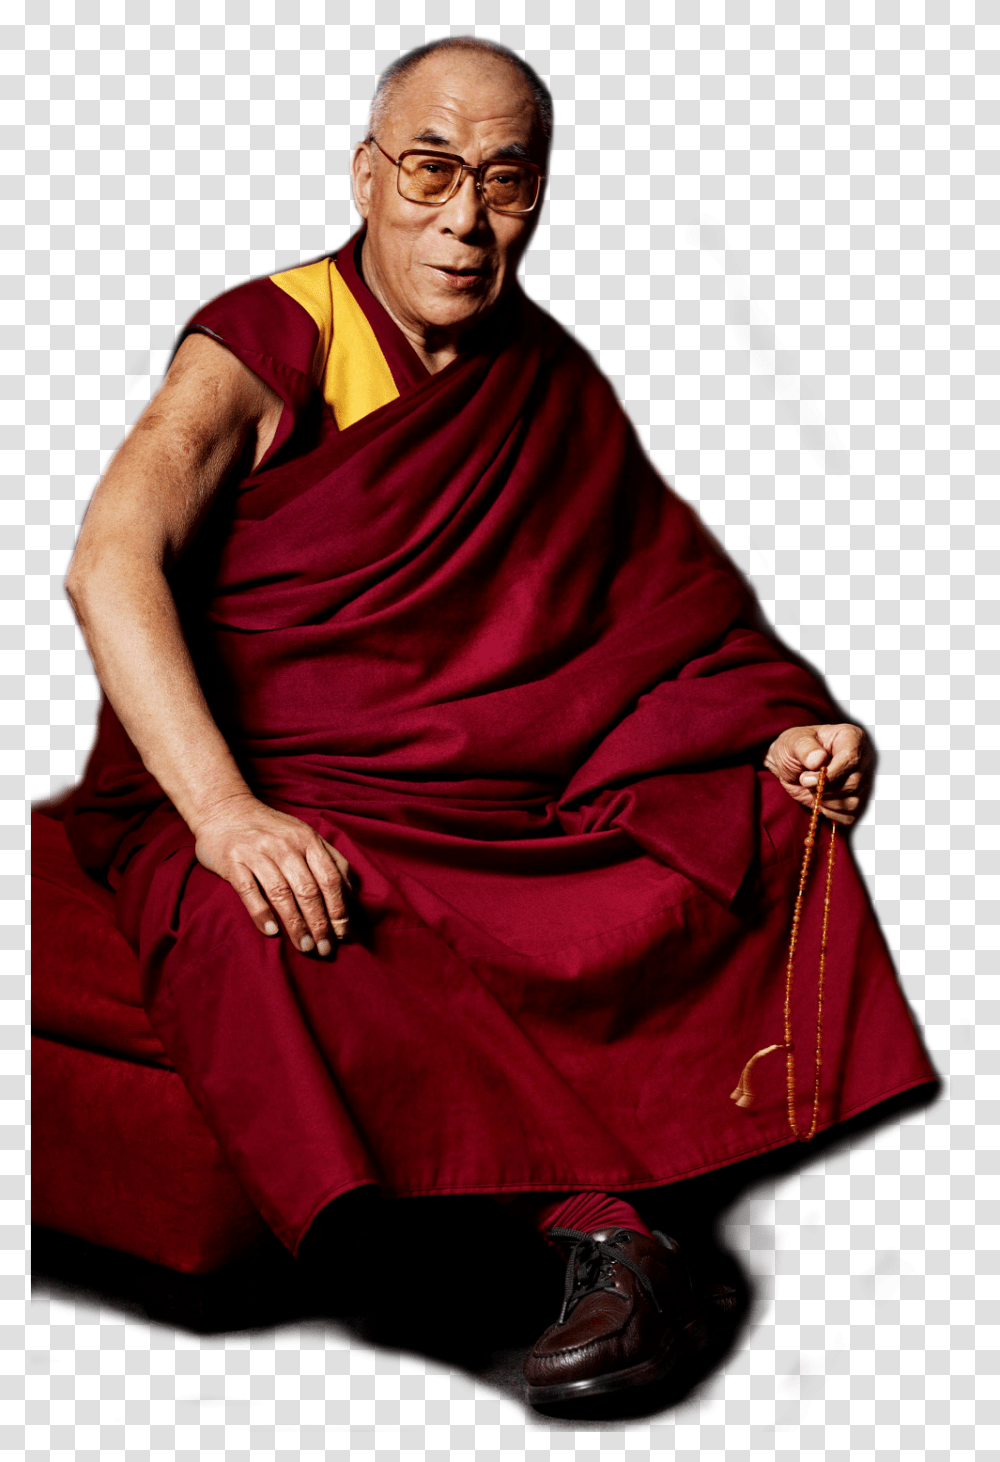 Dalai Lama Image Background 14th Dalai Lama No Background, Monk, Person, Human, Shoe Transparent Png